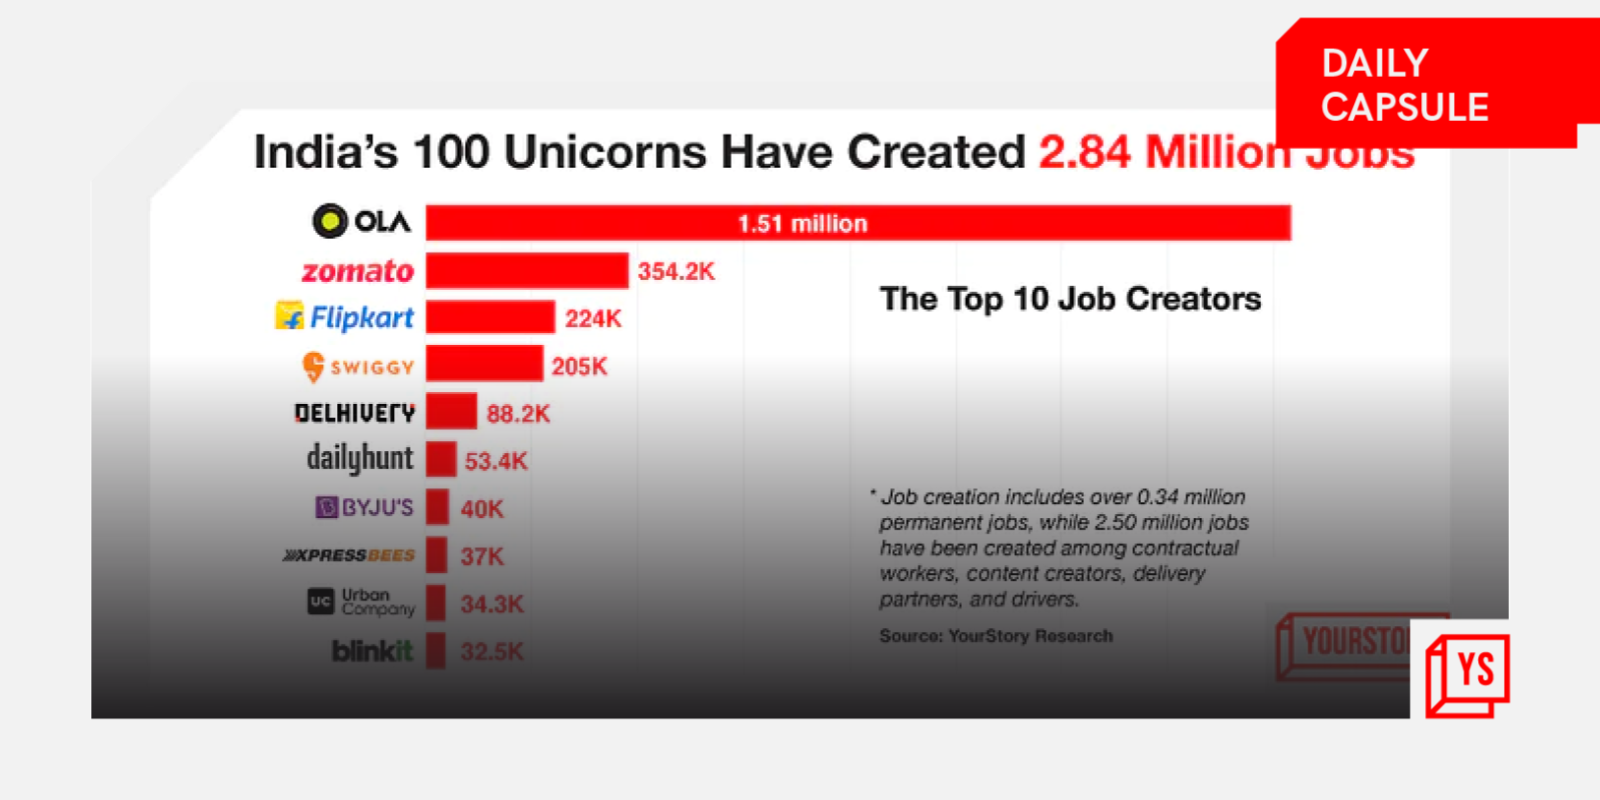 Ola, Swiggy or Zomato–Which unicorn has created more jobs?
